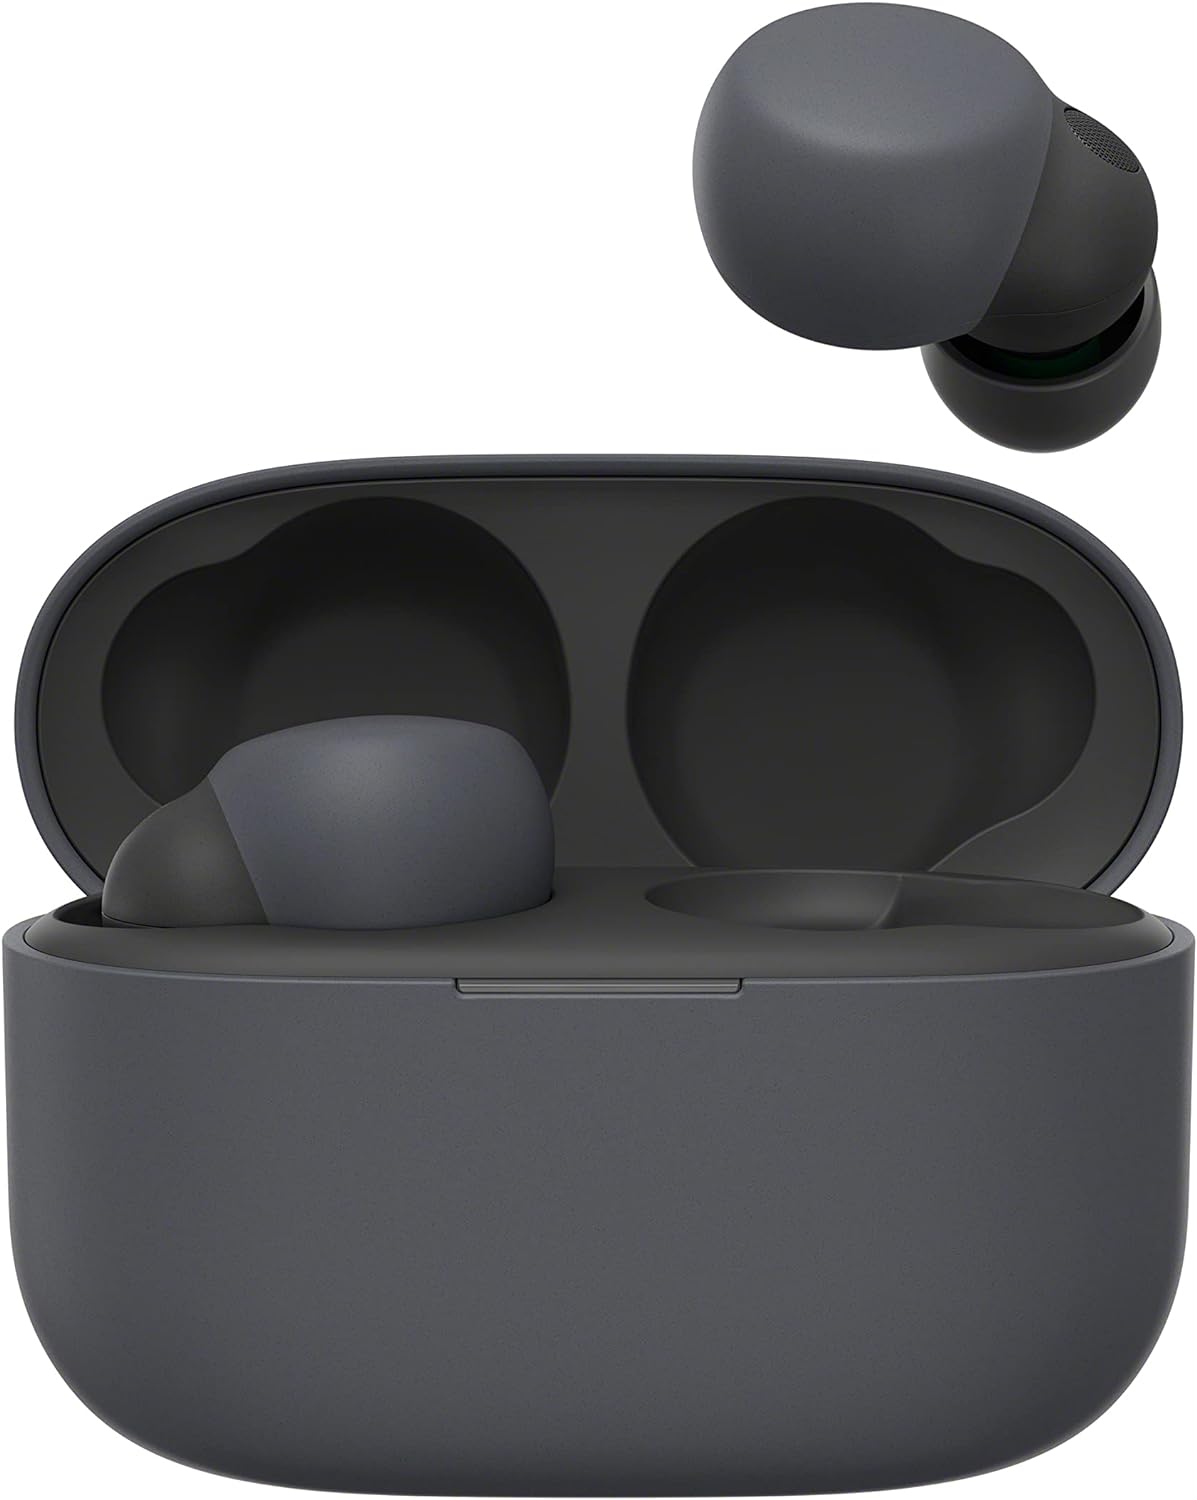 Sony LinkBuds S Truly Wireless Noise Canceling Earbud Headphones - $120